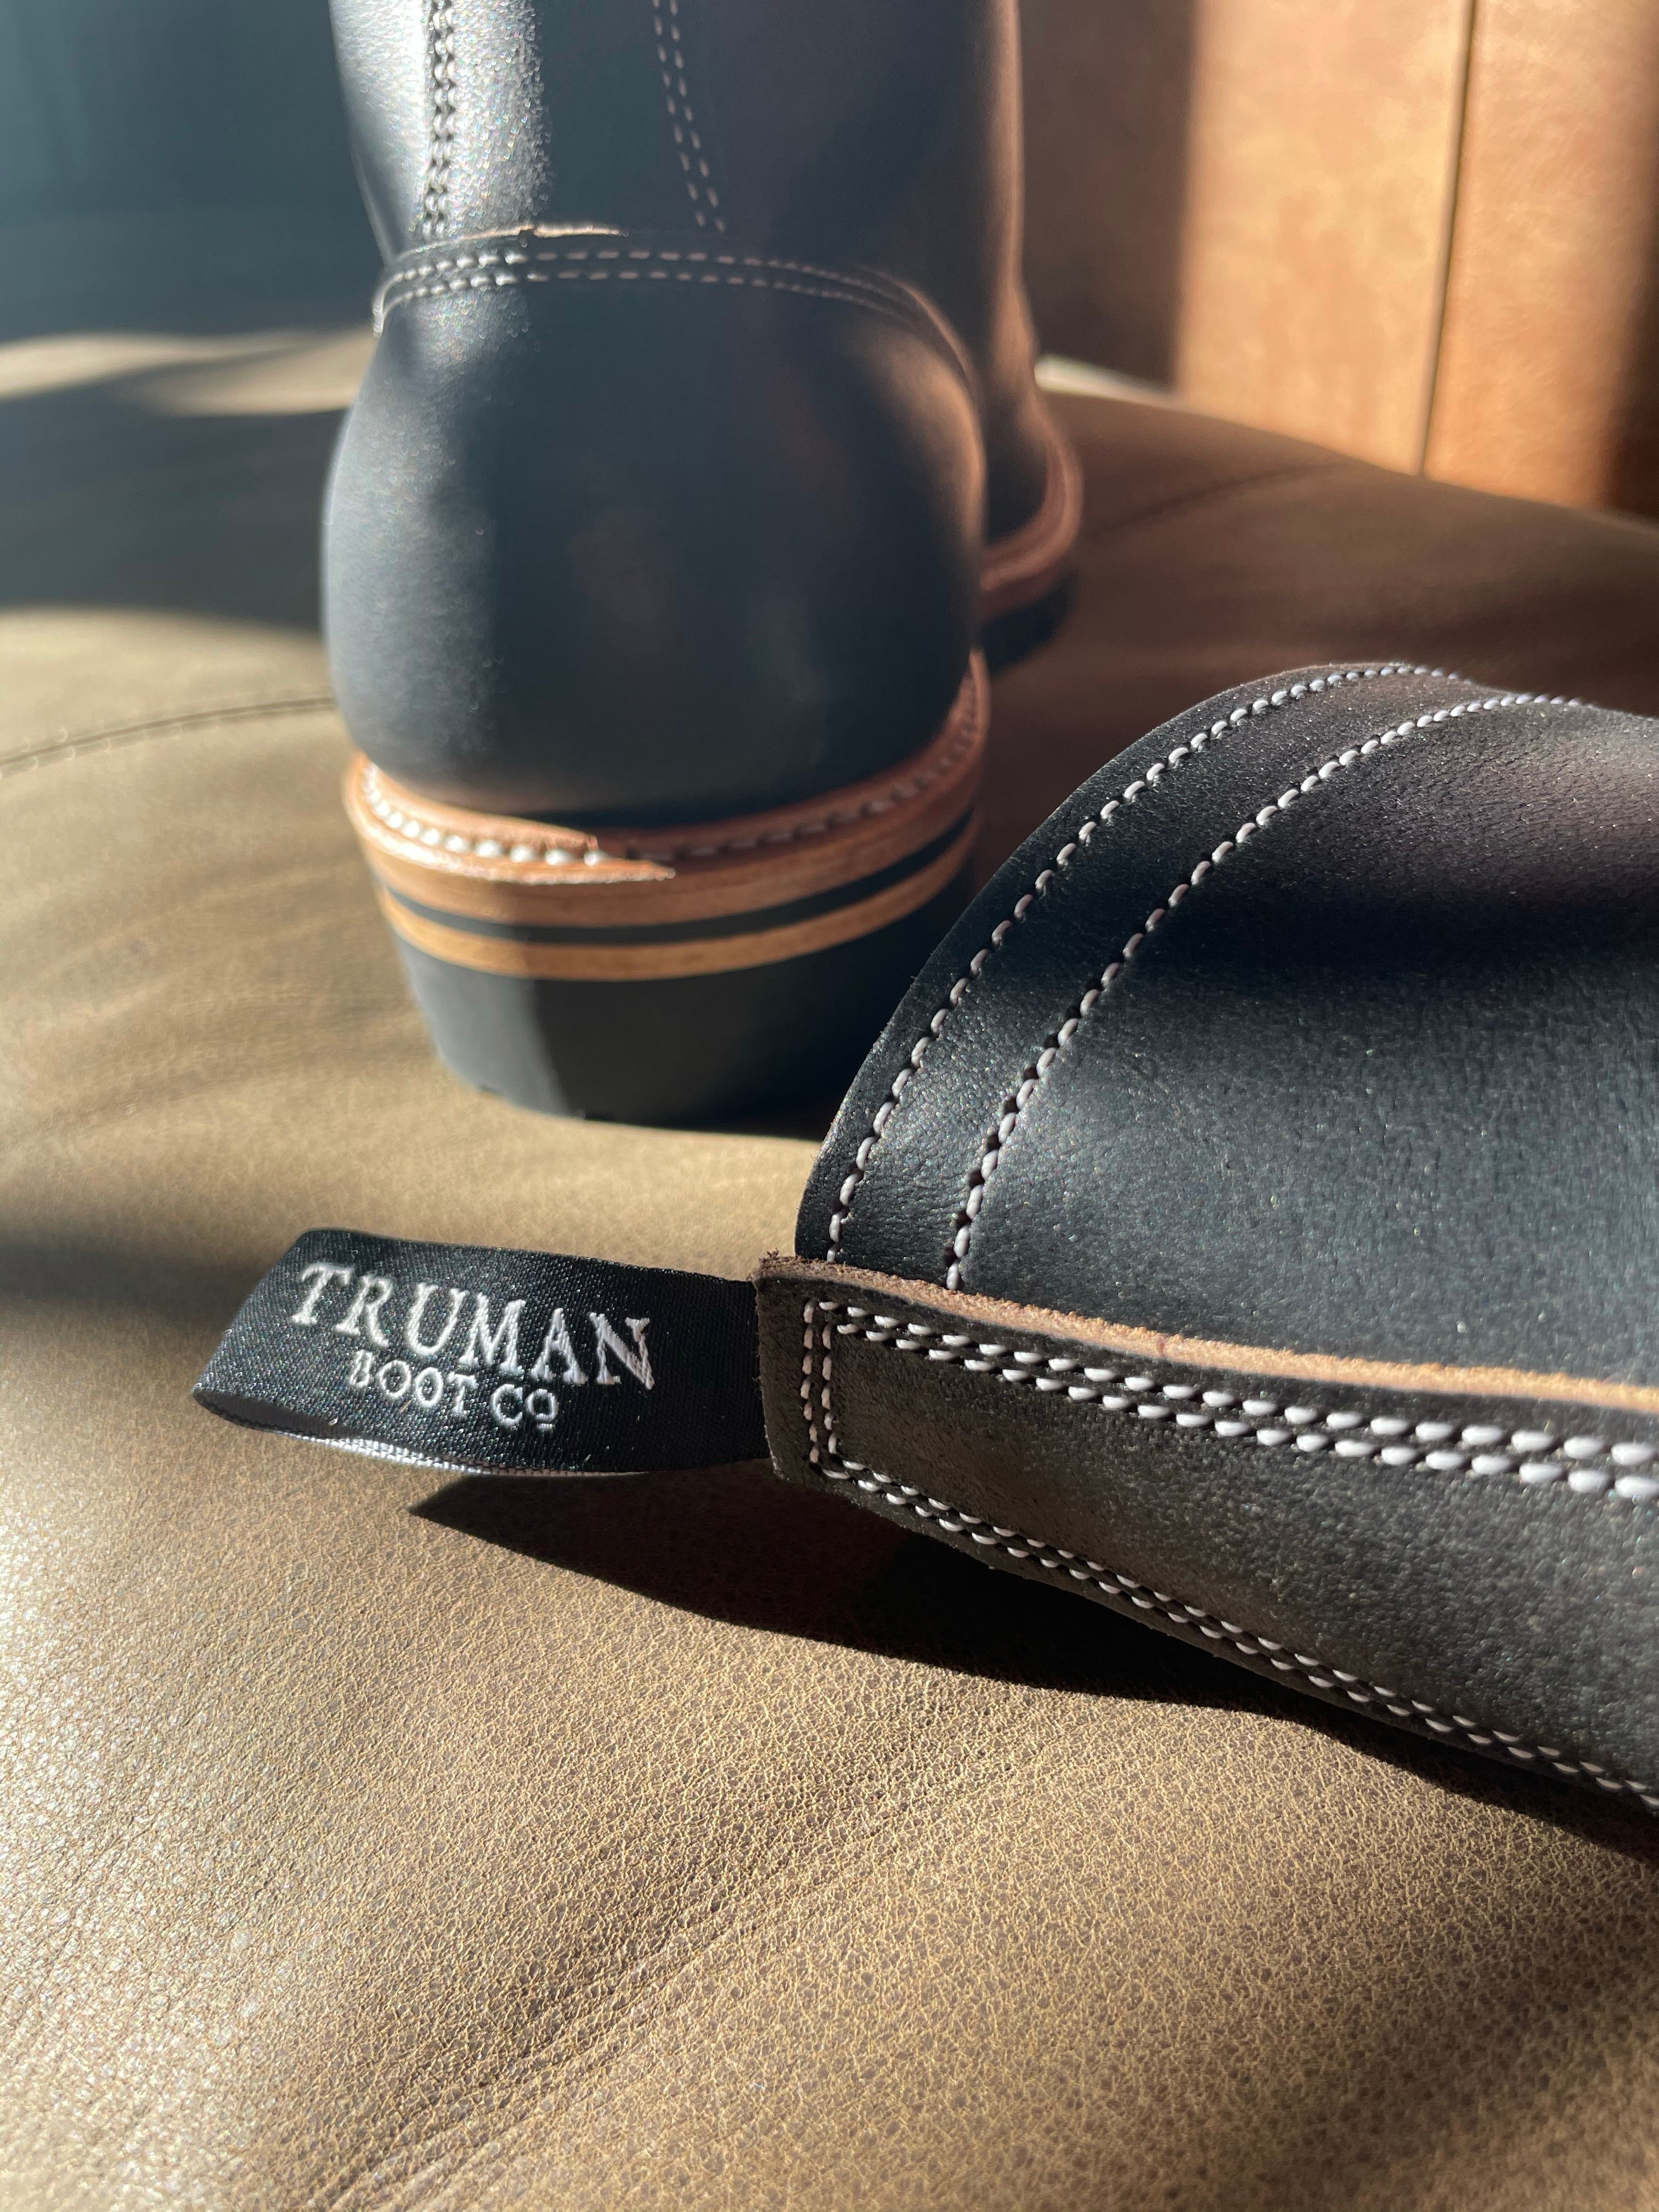 Tommys Closet - Truman Boots - Super 8's - Size 8